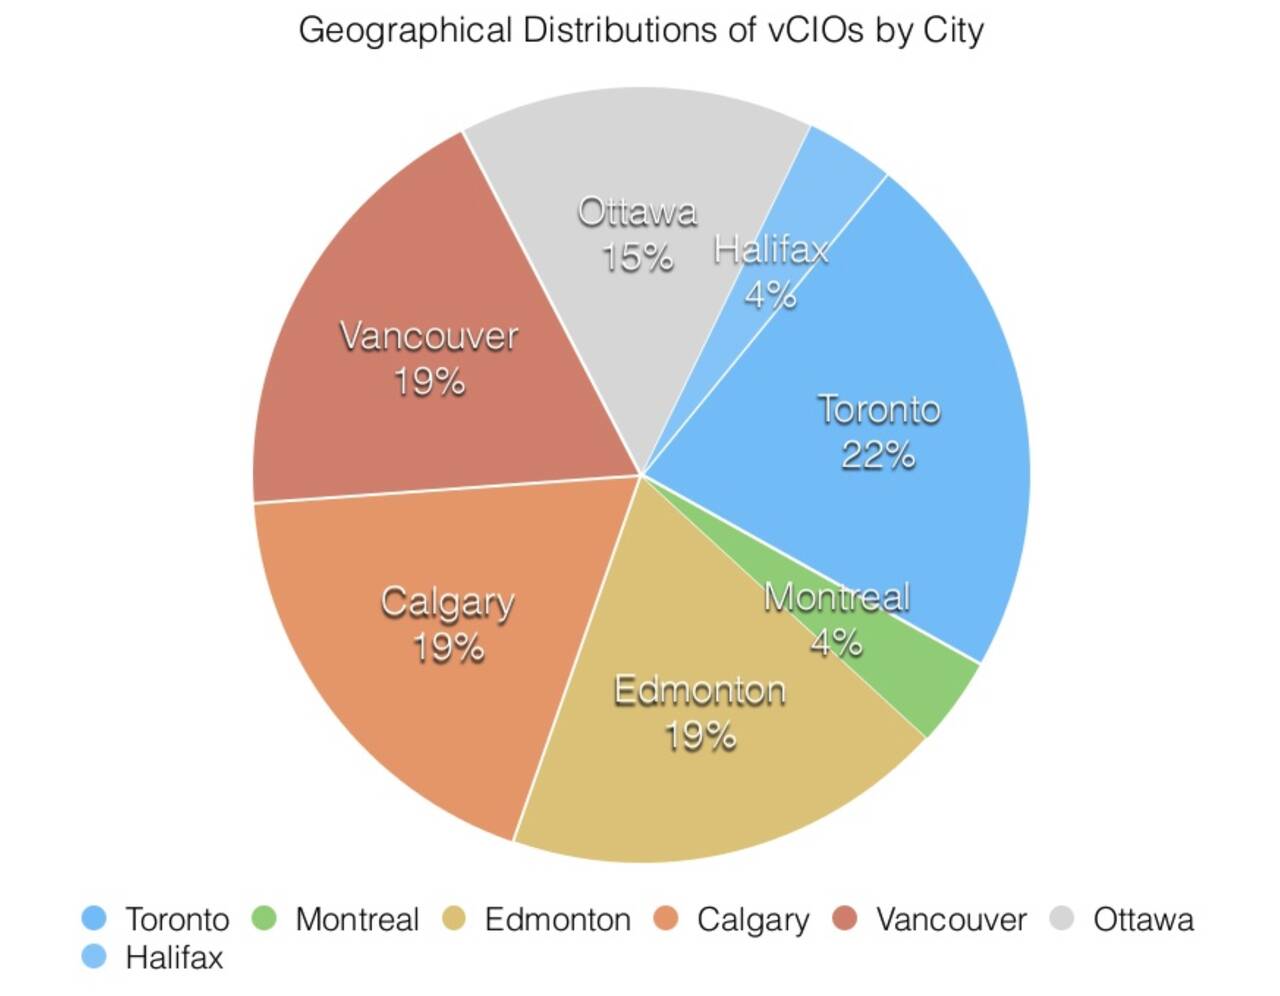 vCIOs by city in Canada